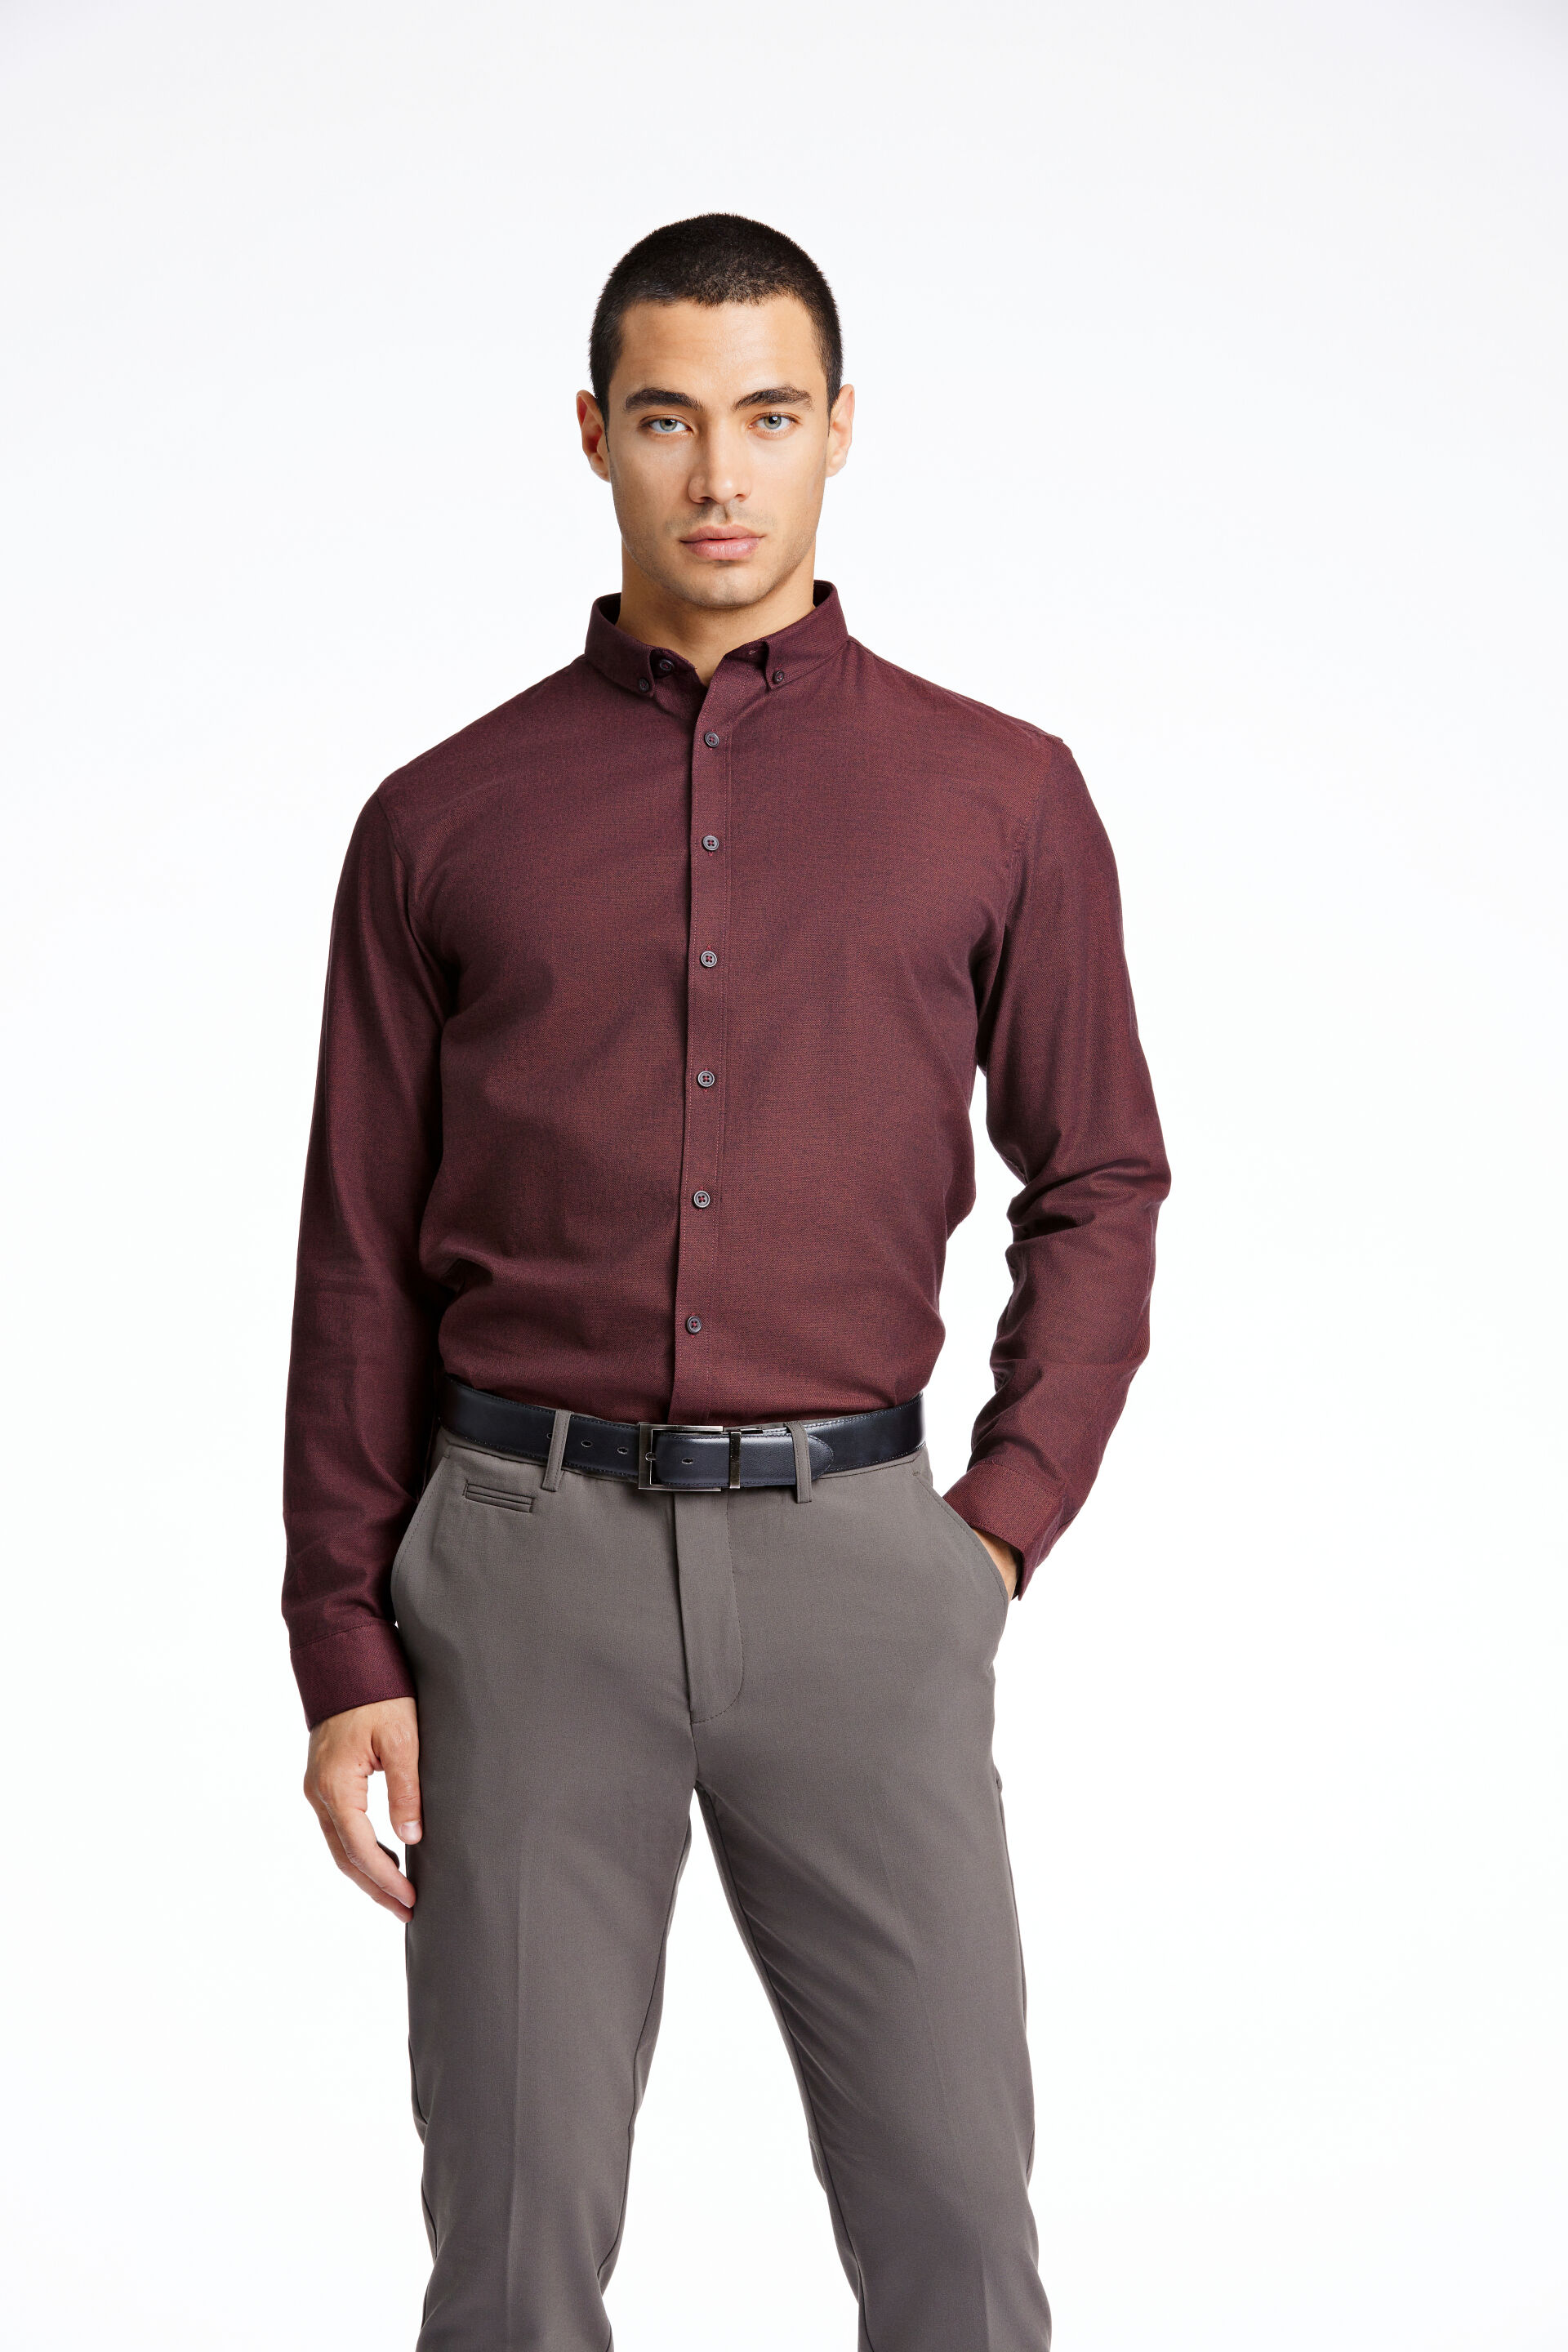 Business casual shirt 30-21064